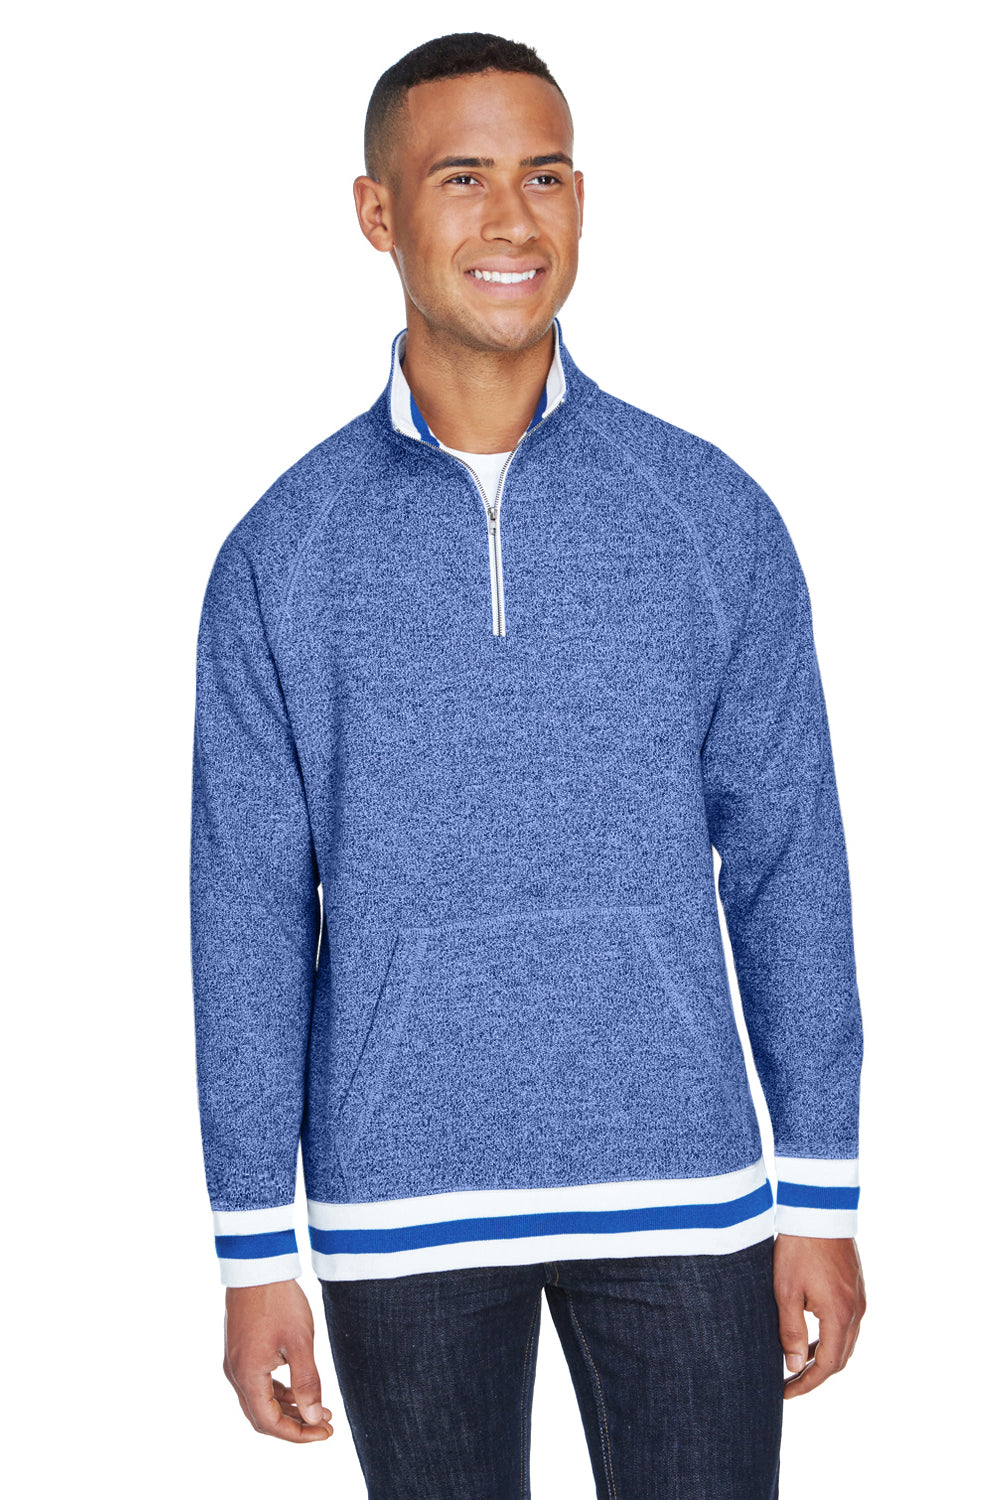 J America JA8703 Mens Peppered Fleece 1/4 Zip Sweatshirt Royal Blue Front